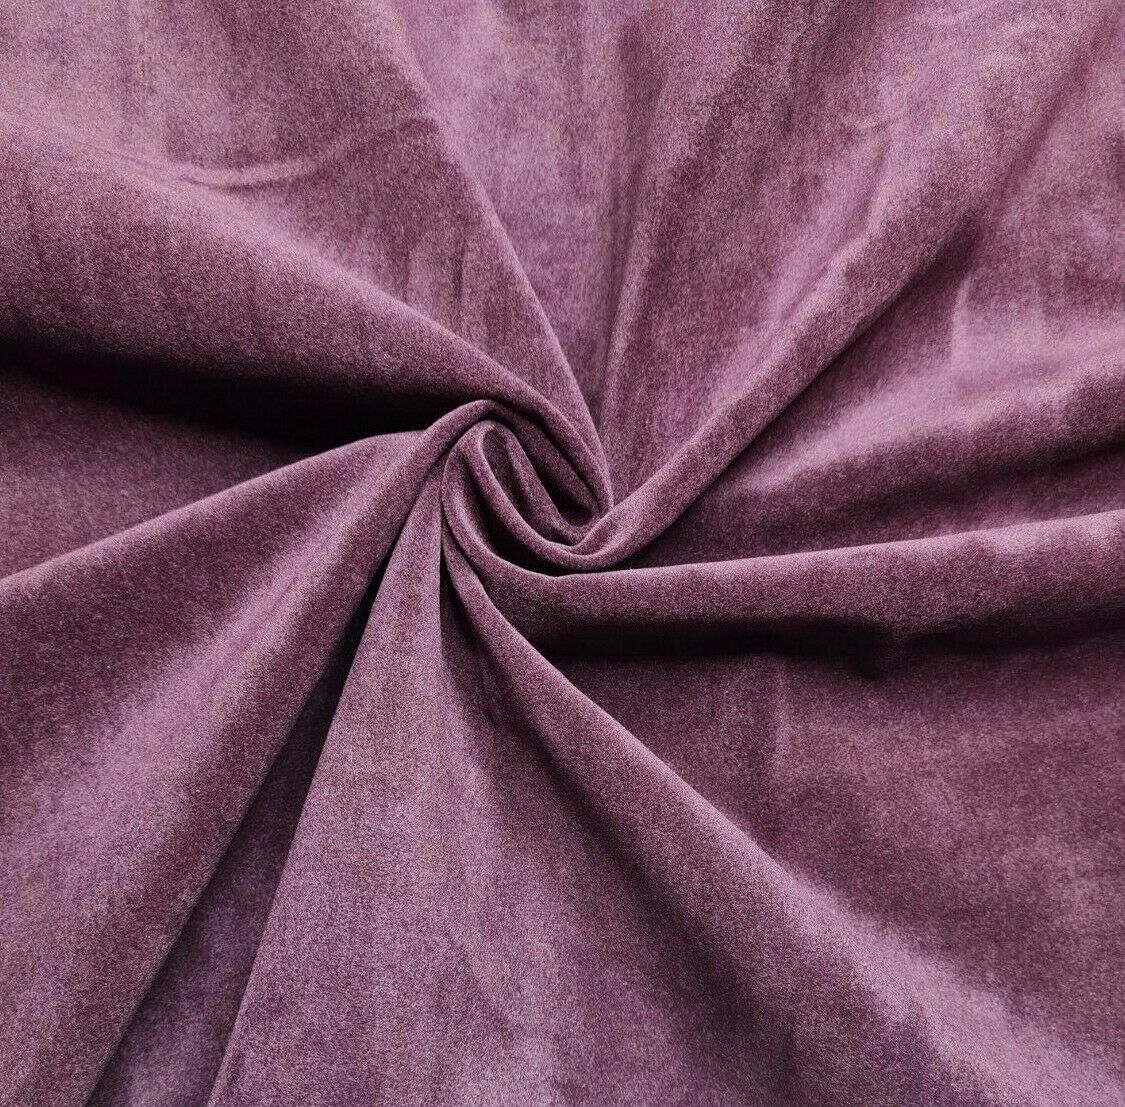 Cotton Velour Fabric Matte Plum Colour 55 Wide Sold By The Metre